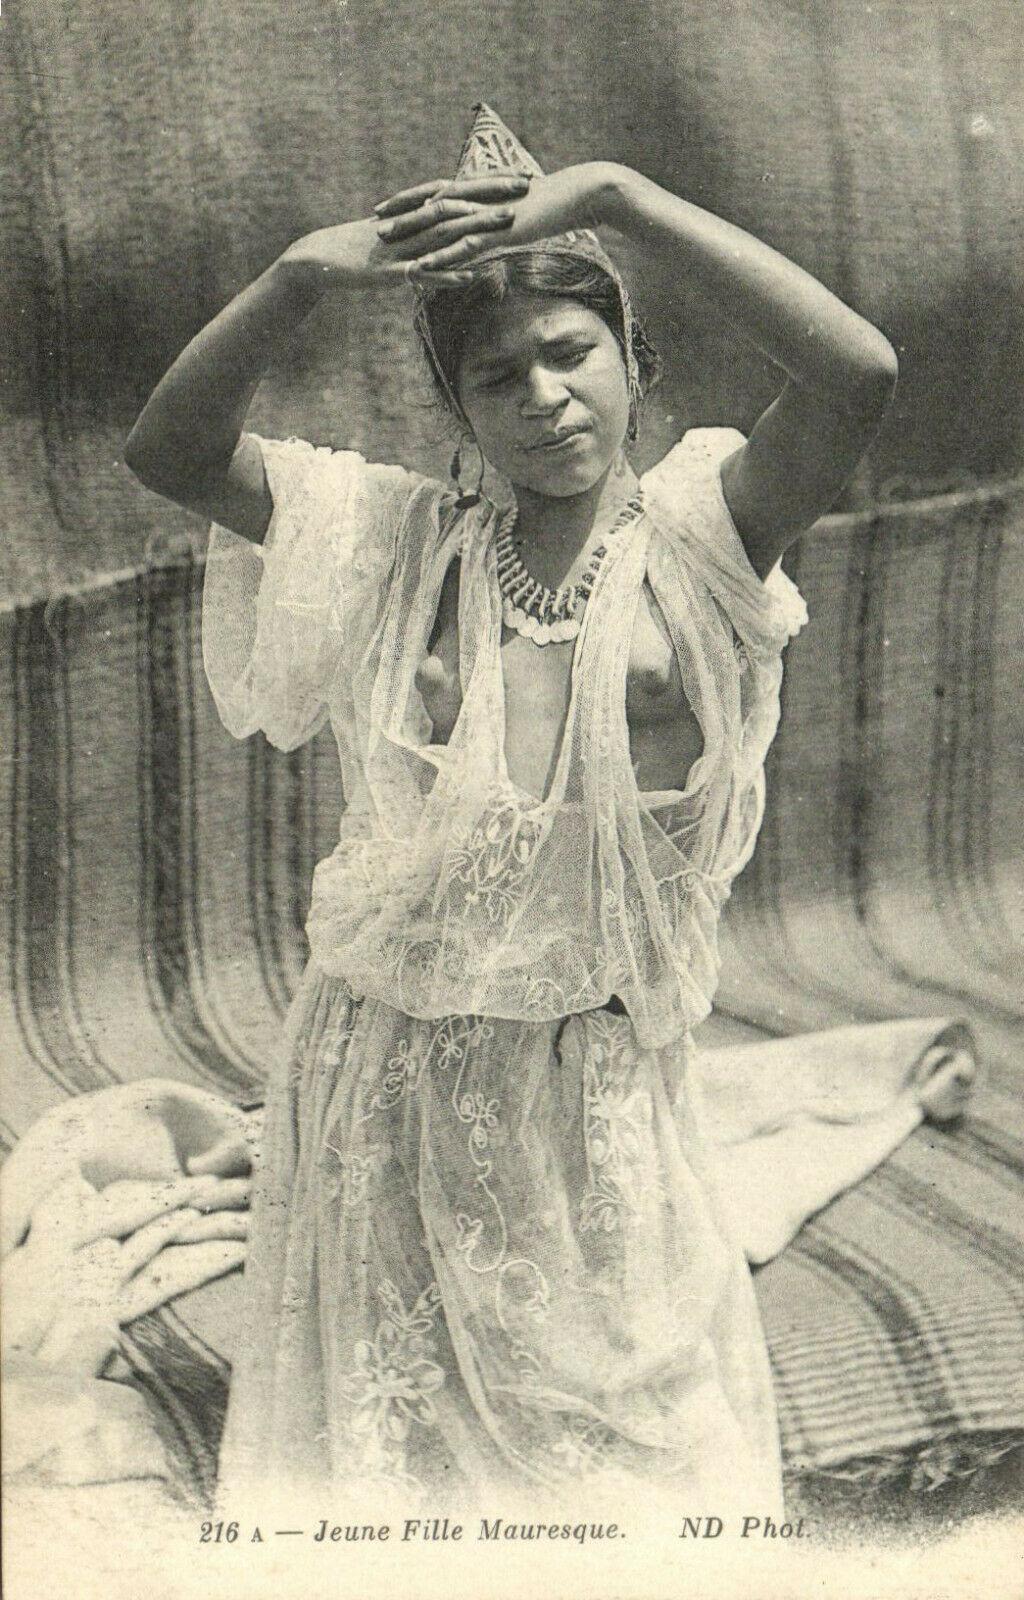 PC CPA Ethnic Nude Native Mandibu Type Young Females Vintage Postcard  (B634)  Europe - France - Provence-Alpes-Cote d'Azur - Alpes Maritimes  [06] - N / HipPostcard